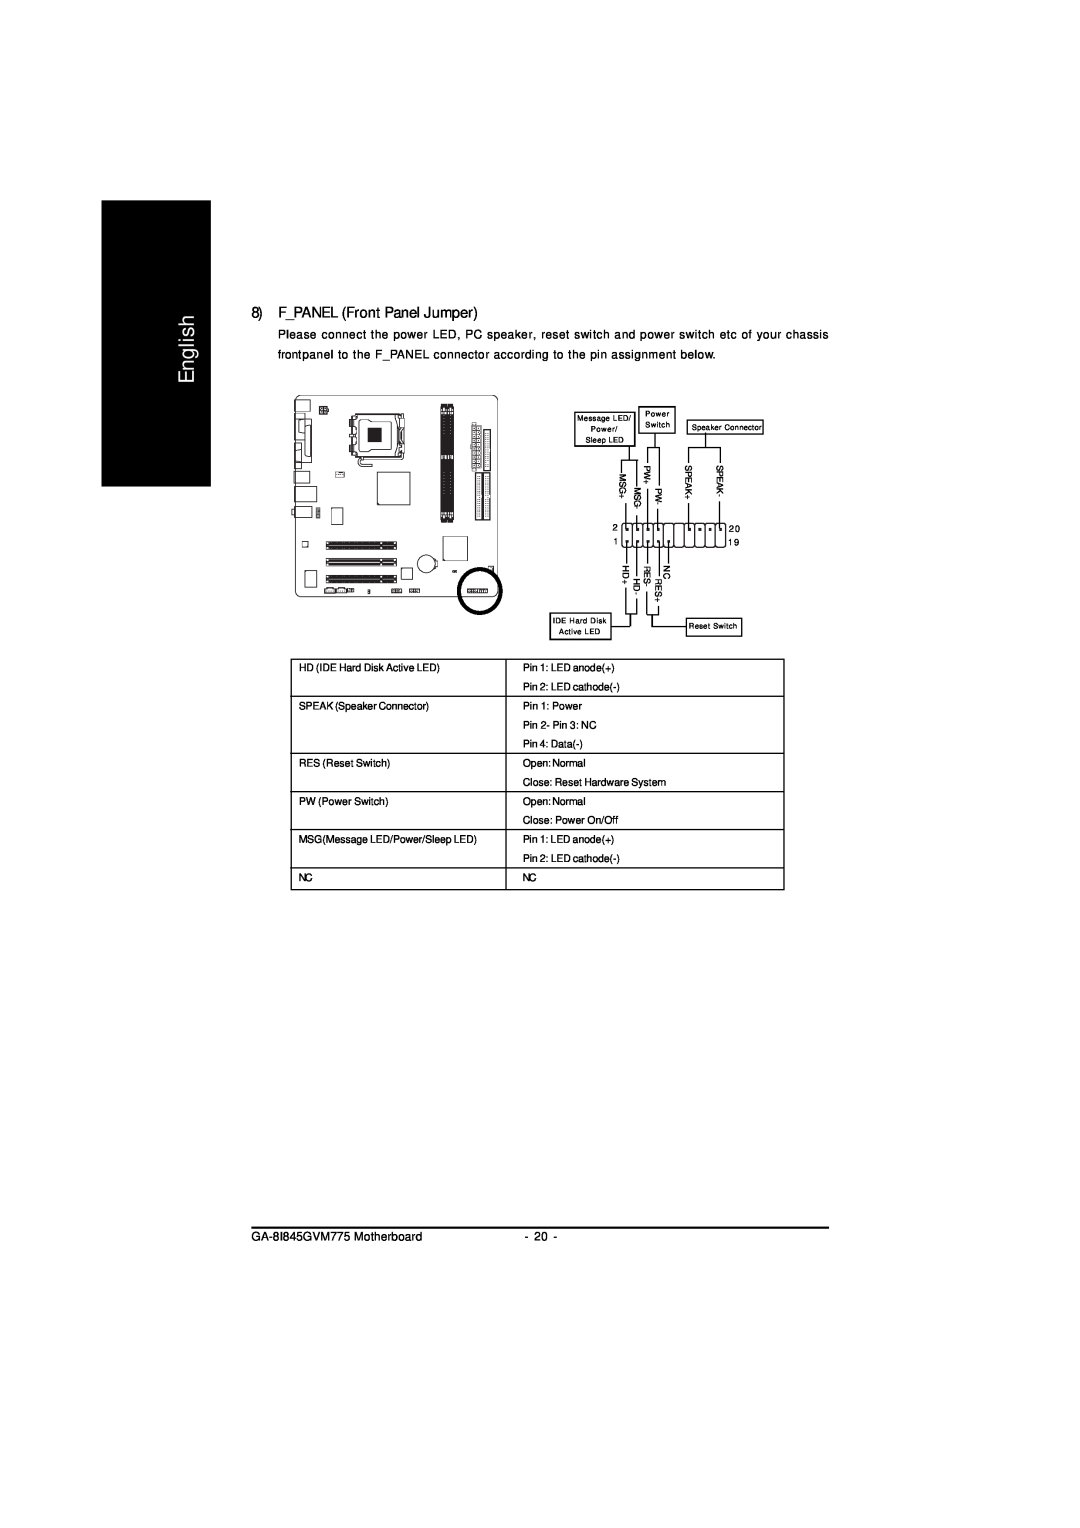 Gigabyte GA-8I845GVM775 user manual FPANEL Front Panel Jumper, English, MSGMessage LED/Power/Sleep LED 